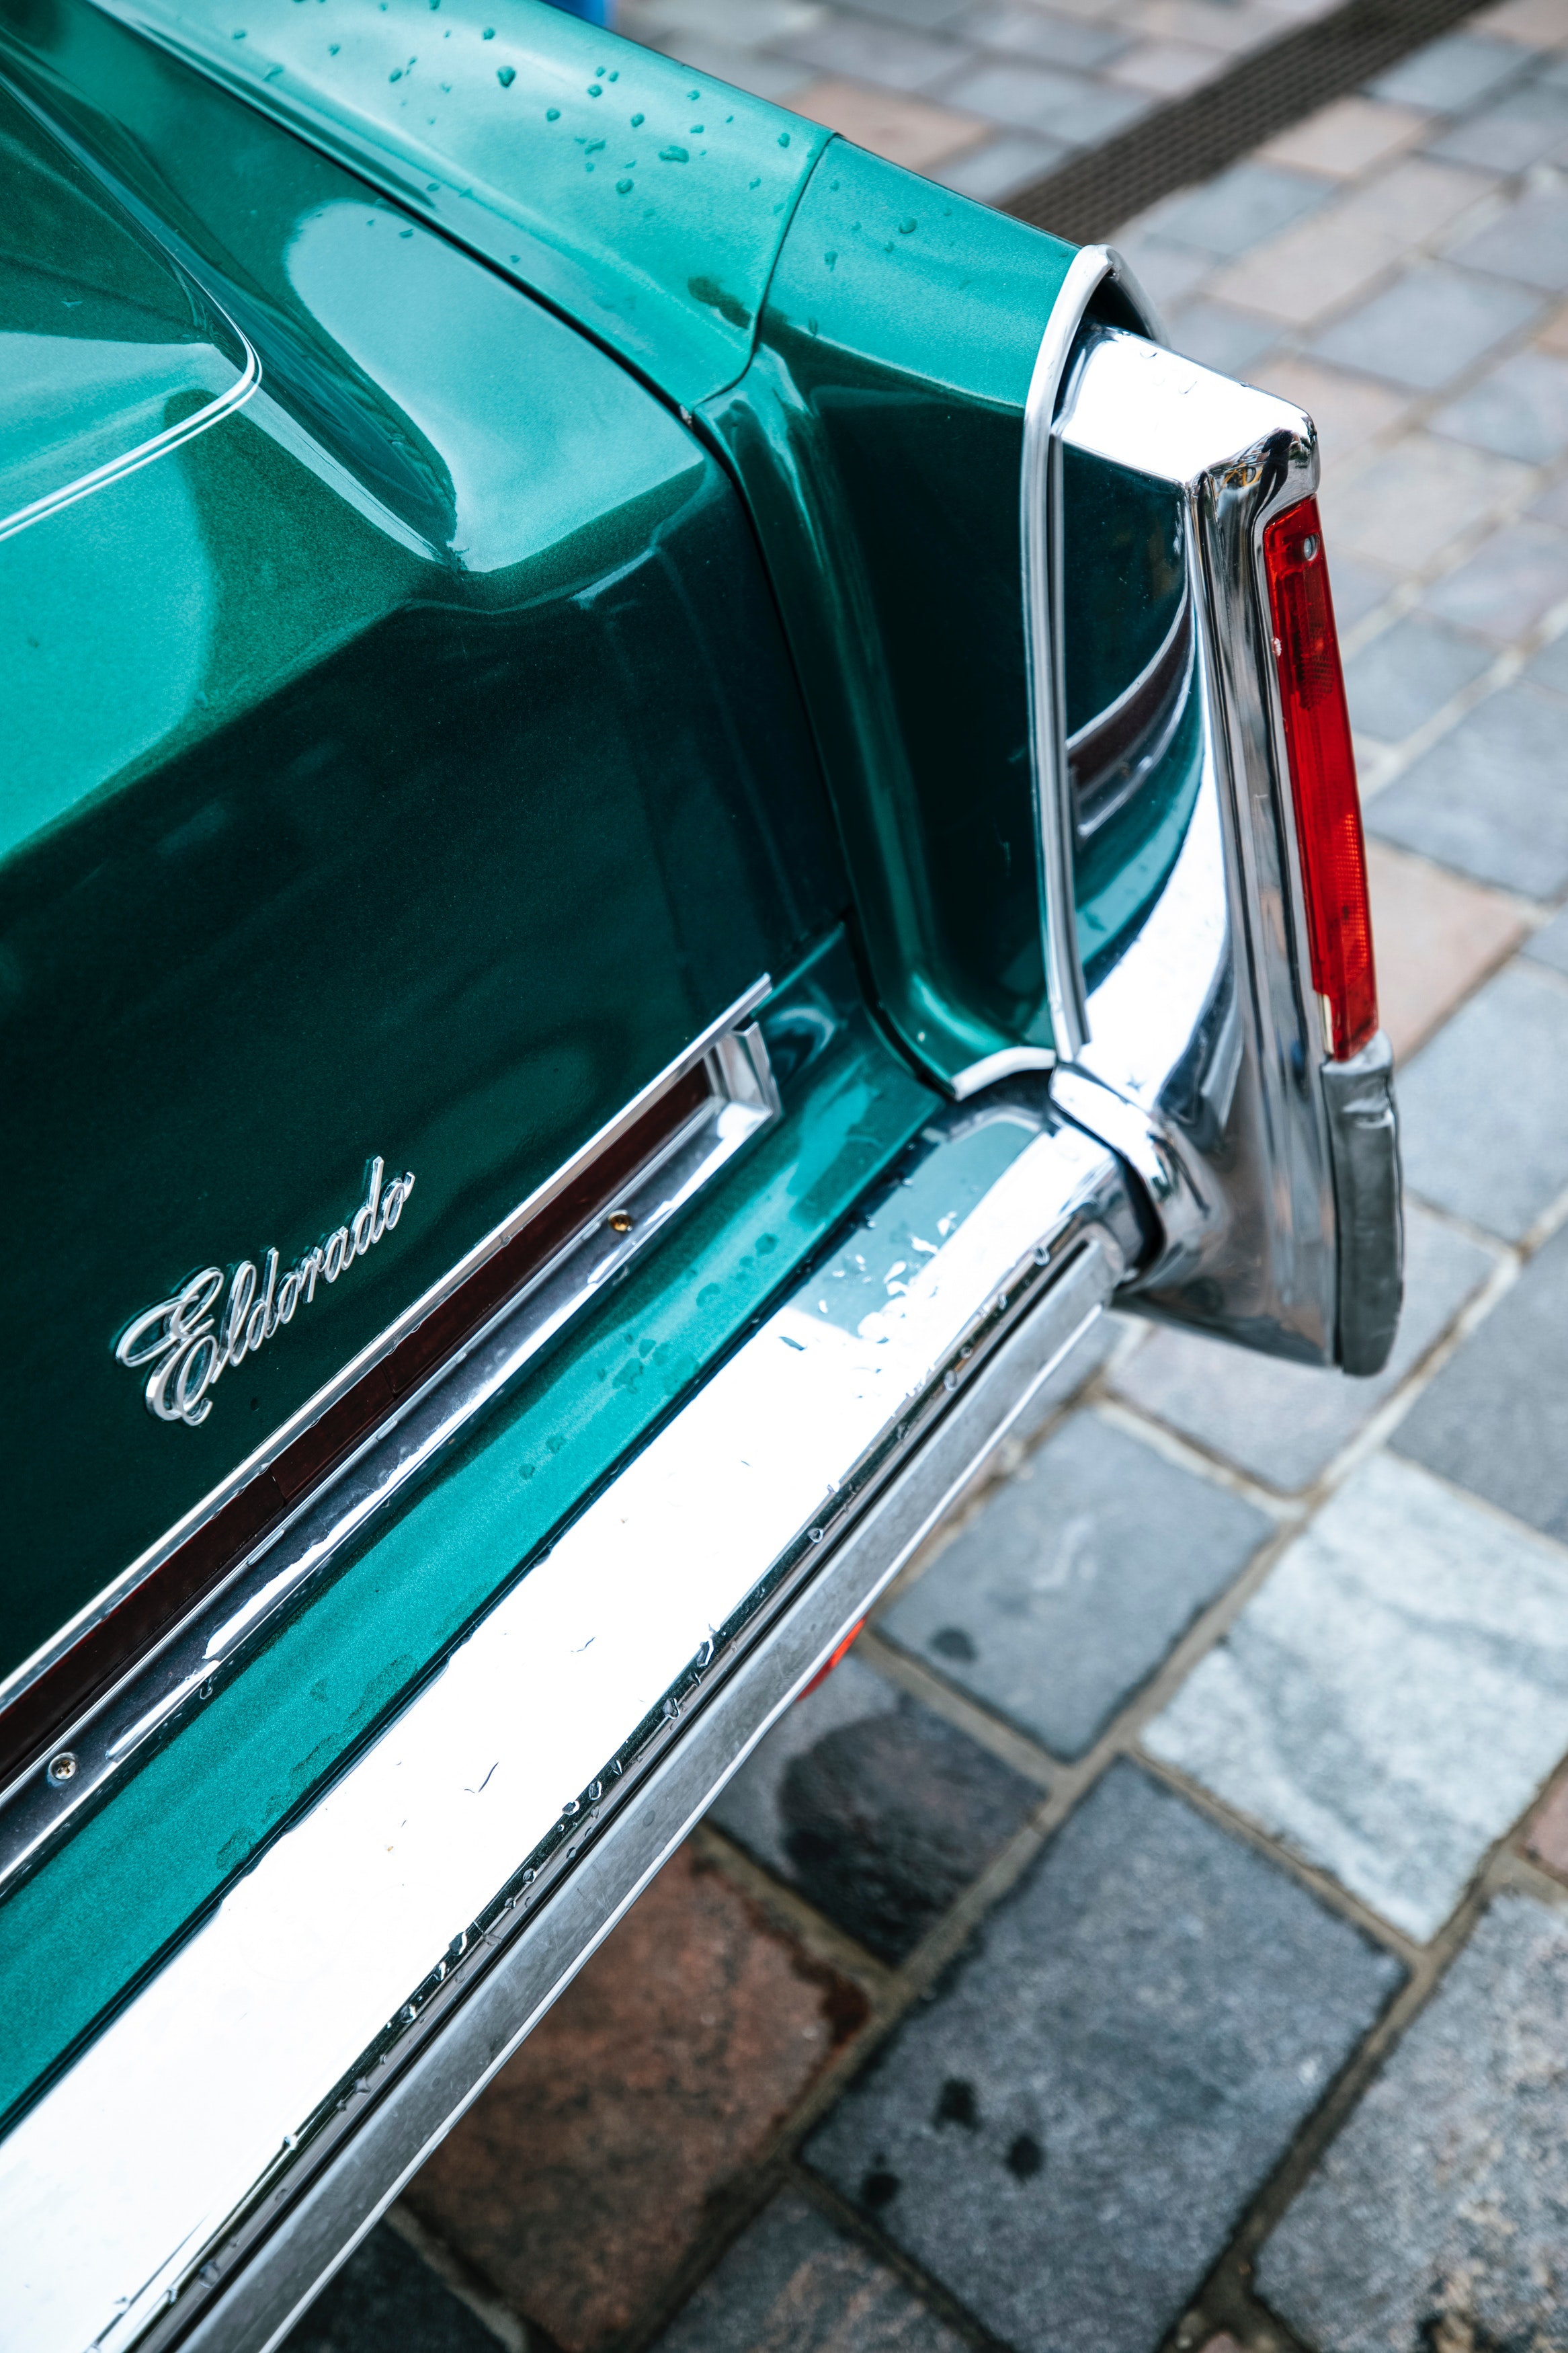 1965 Cadillac Eldorado by Markus Spiske